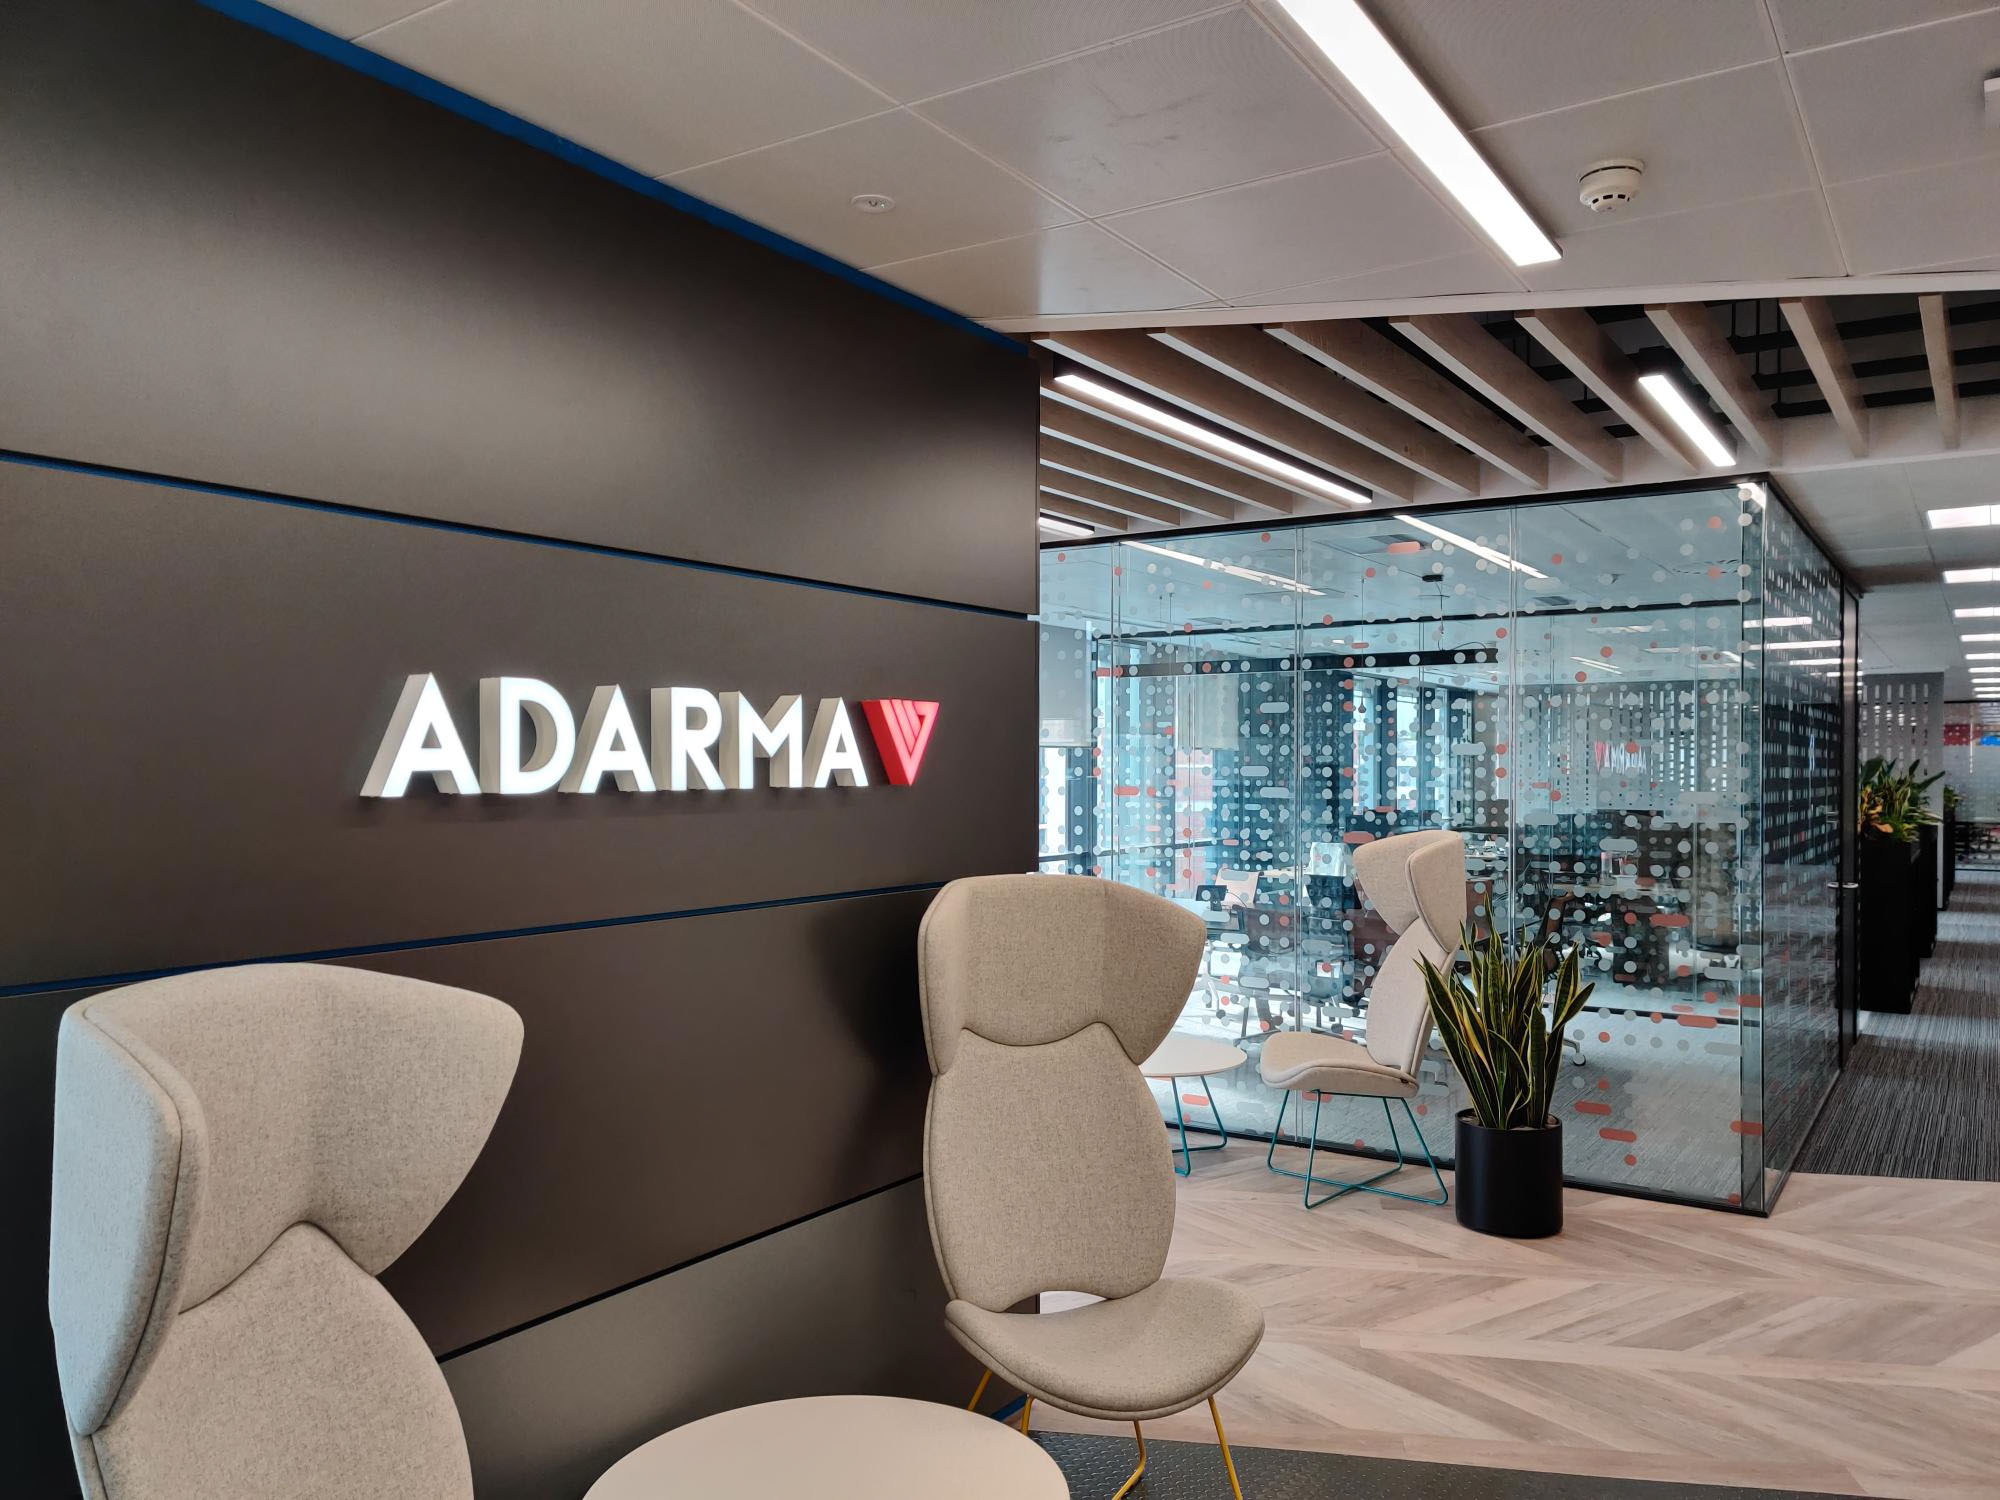 Record year for Edinburgh firm Adarma as turnover hits £41m